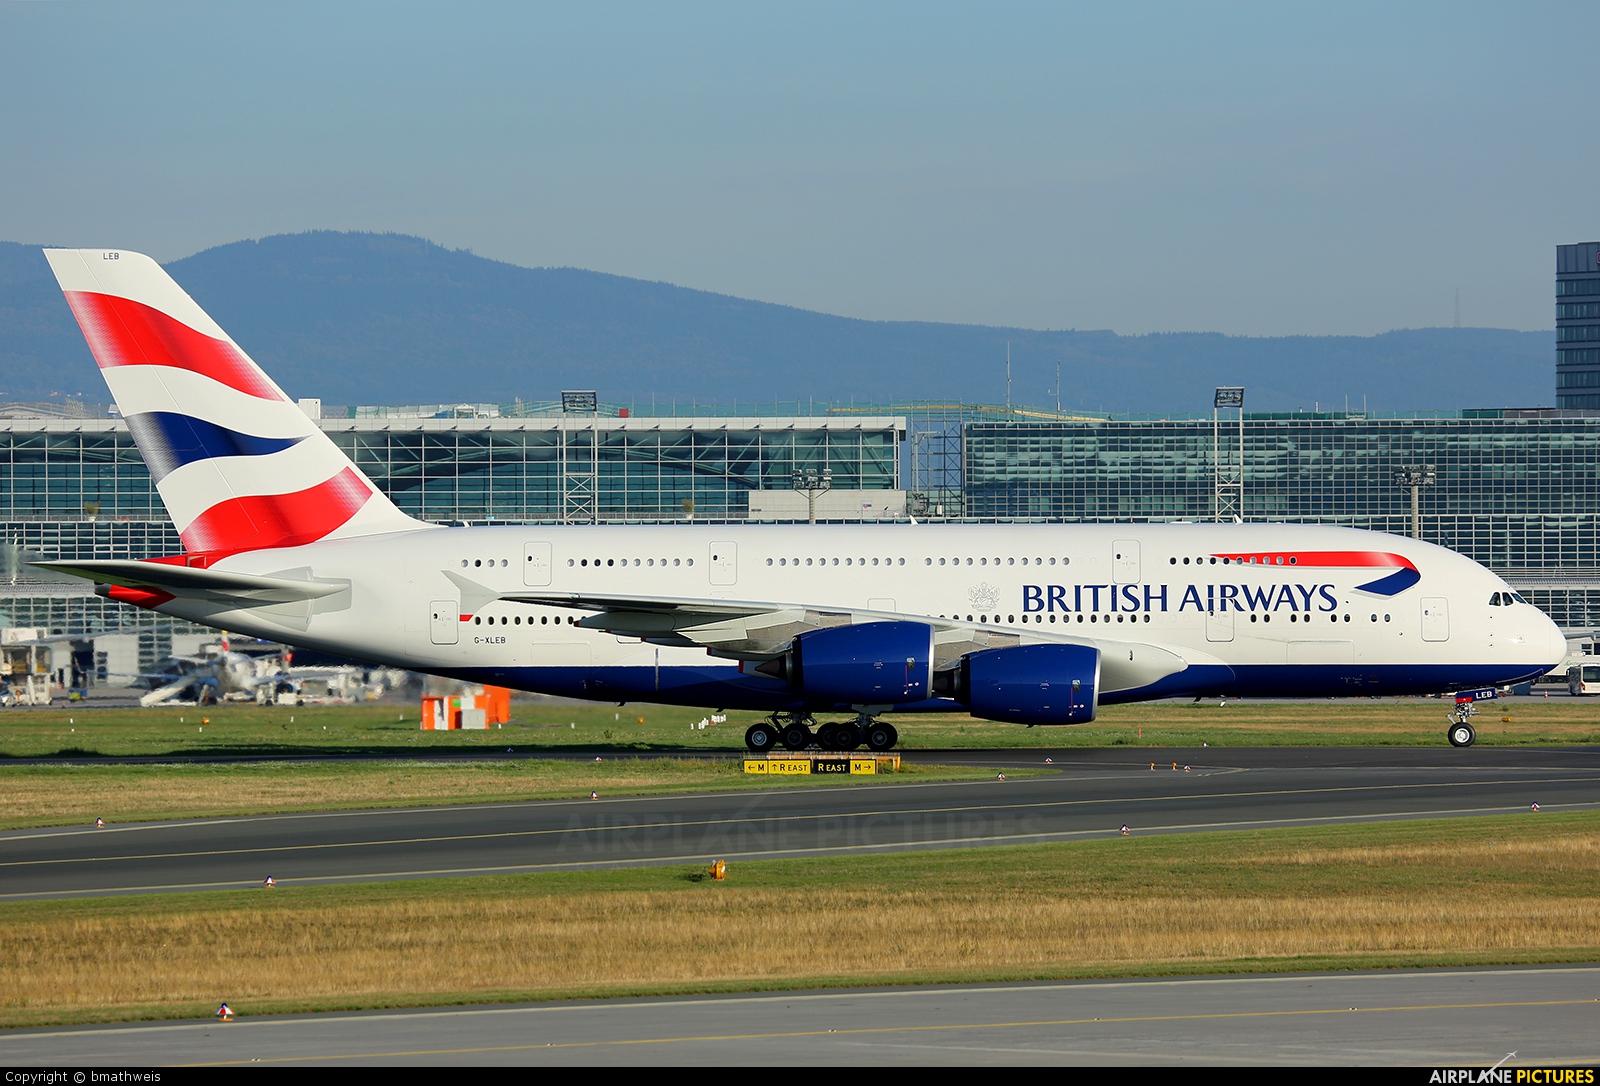 G-XLEB - British Airways Airbus A380 at Frankfurt | Photo ID 342532 ...